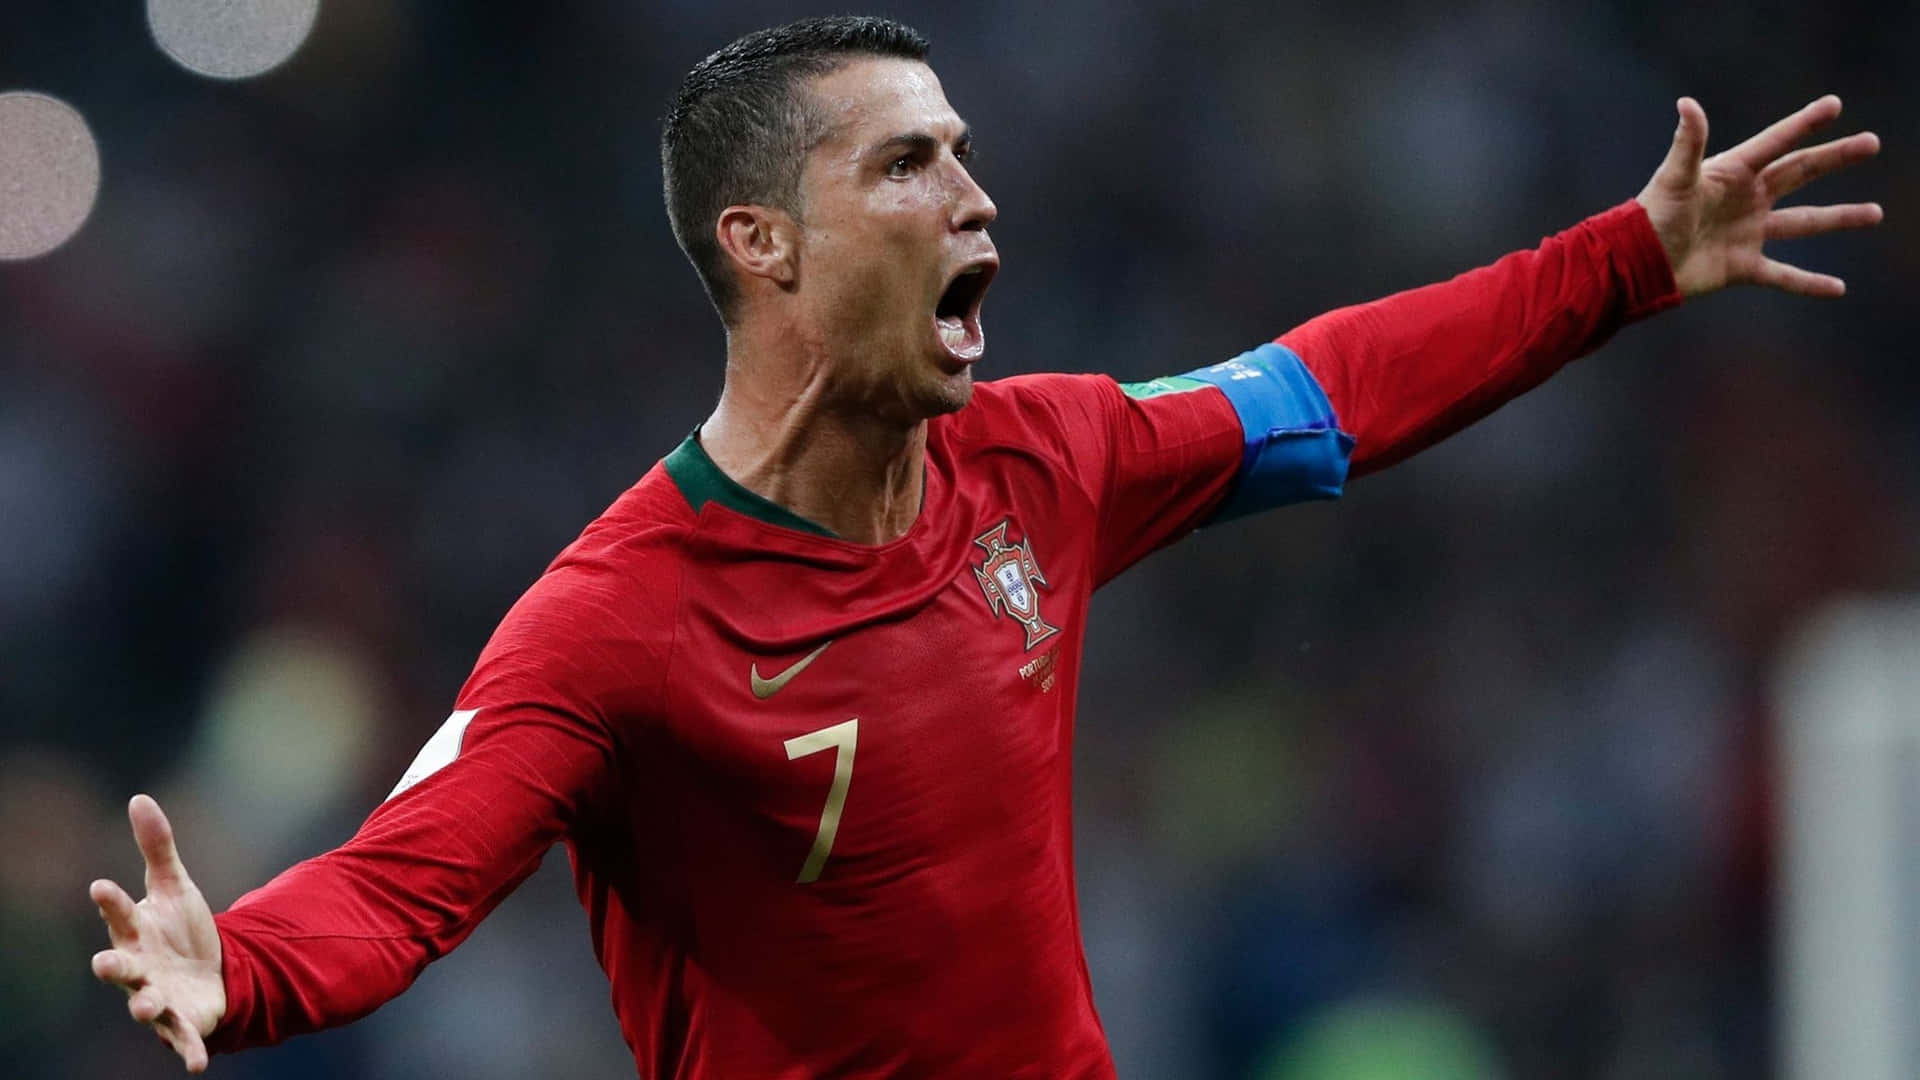 Cristiano Ronaldo dribbles past defenders on the soccer field Wallpaper